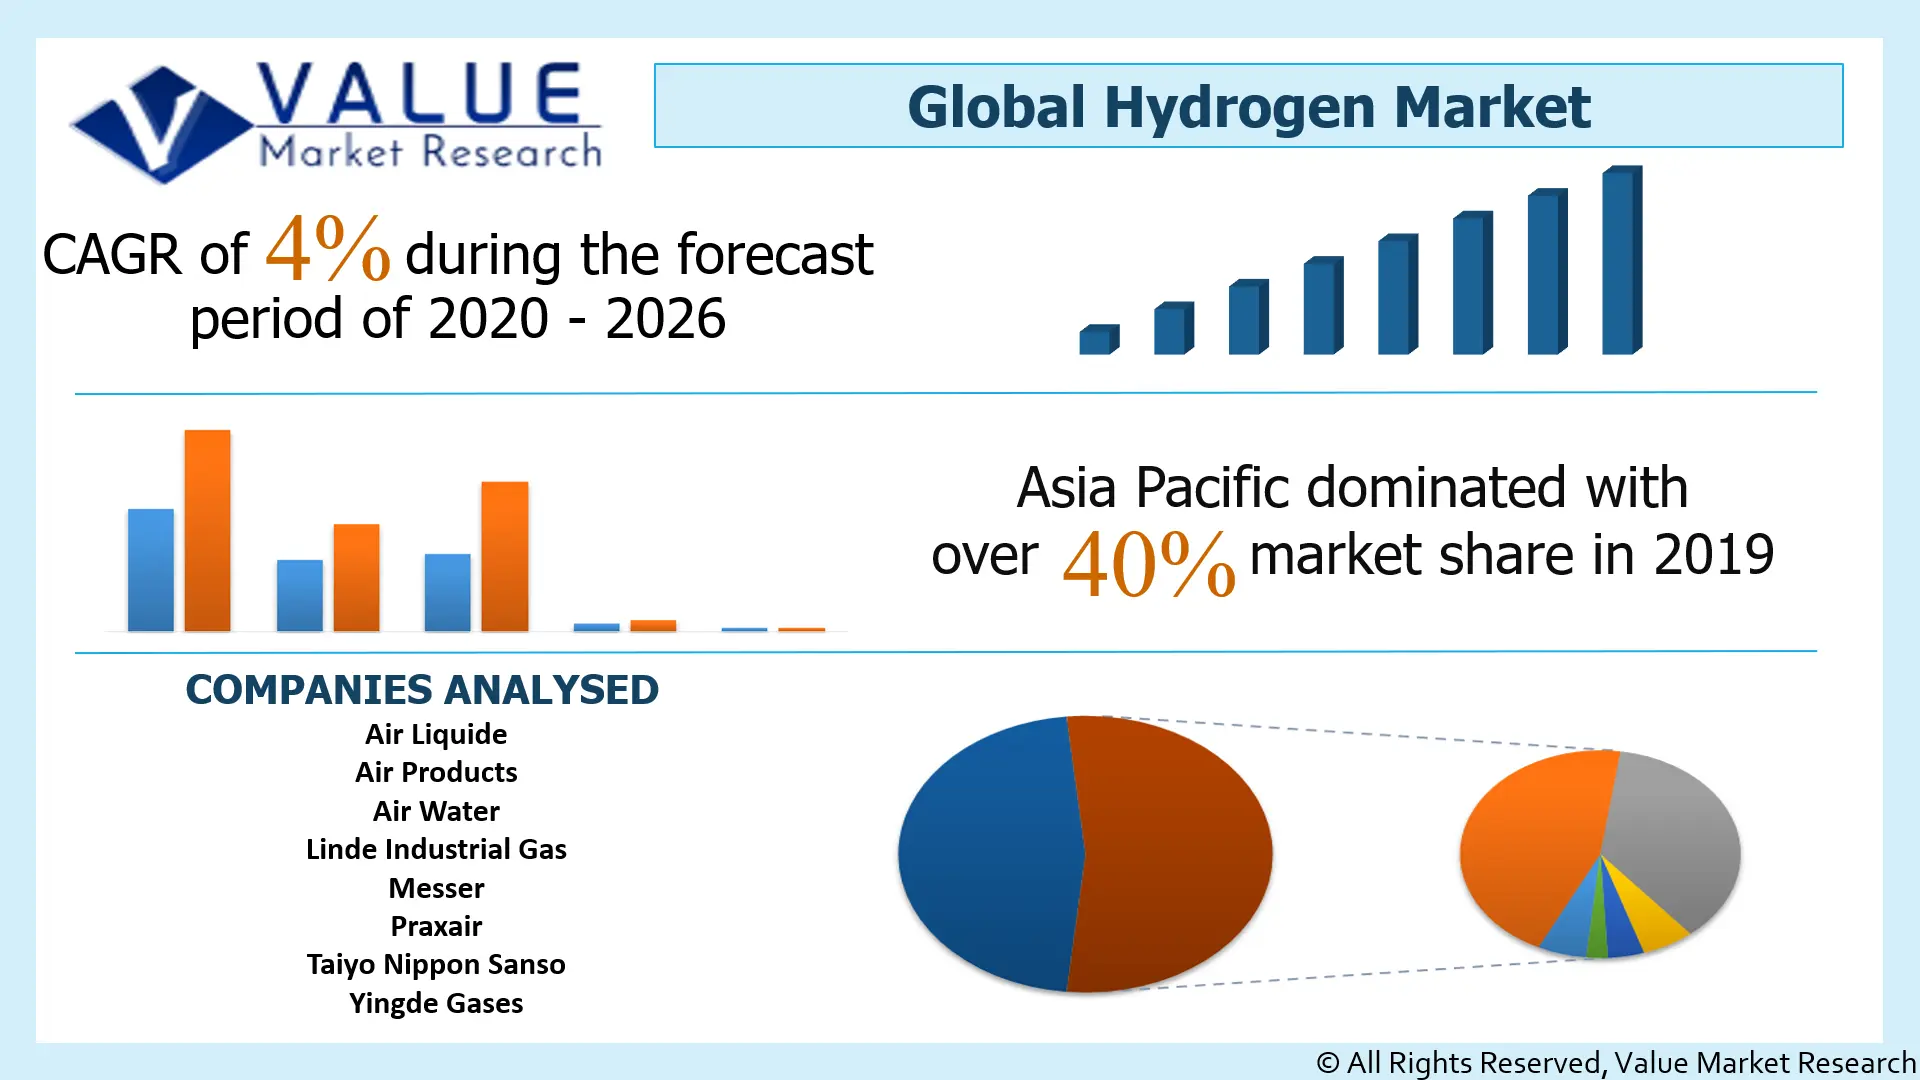 Global Hydrogen Market Share